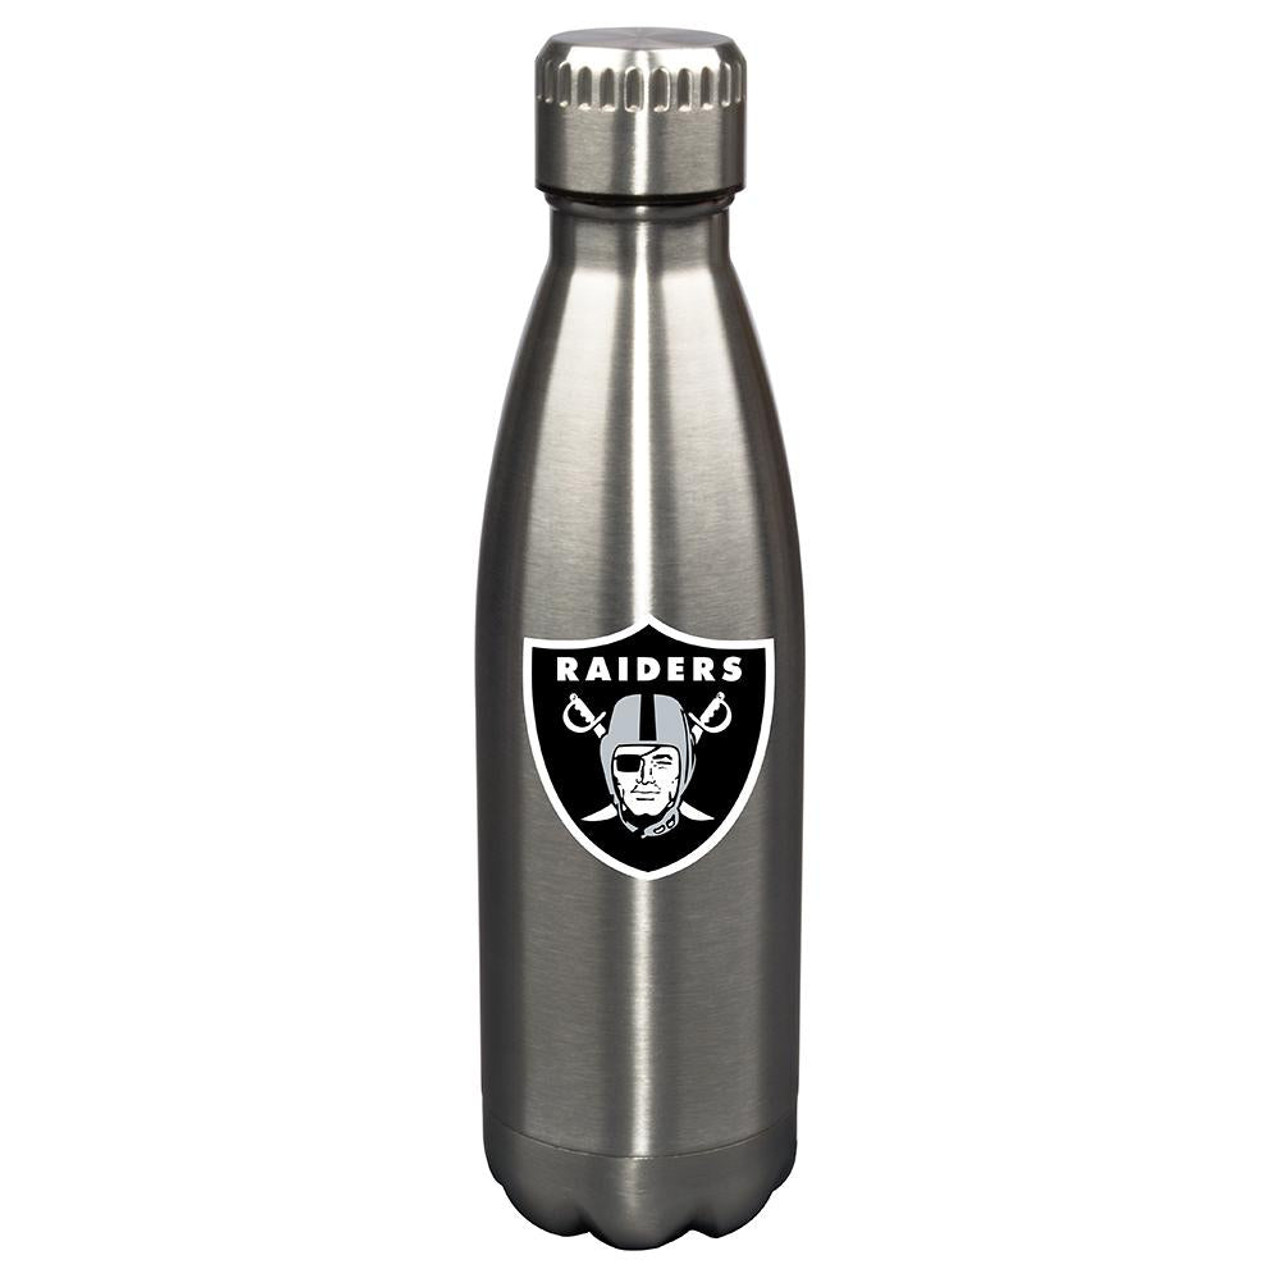 Las Vegas Raiders Stainless Steel Flask 